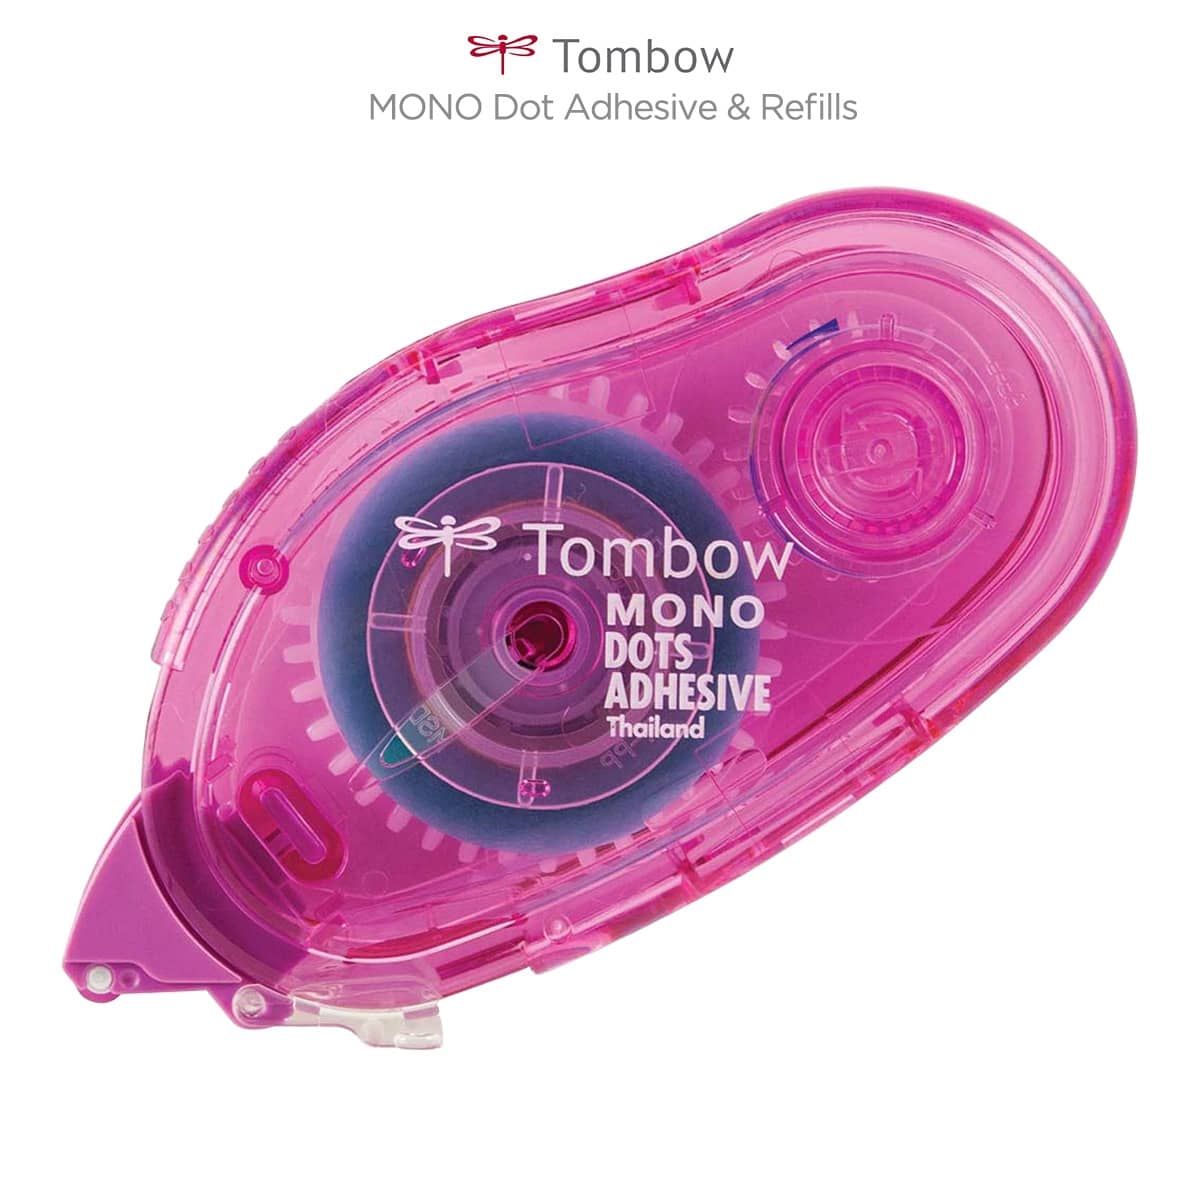 Tombow MONO Dot Adhesive & Refills 